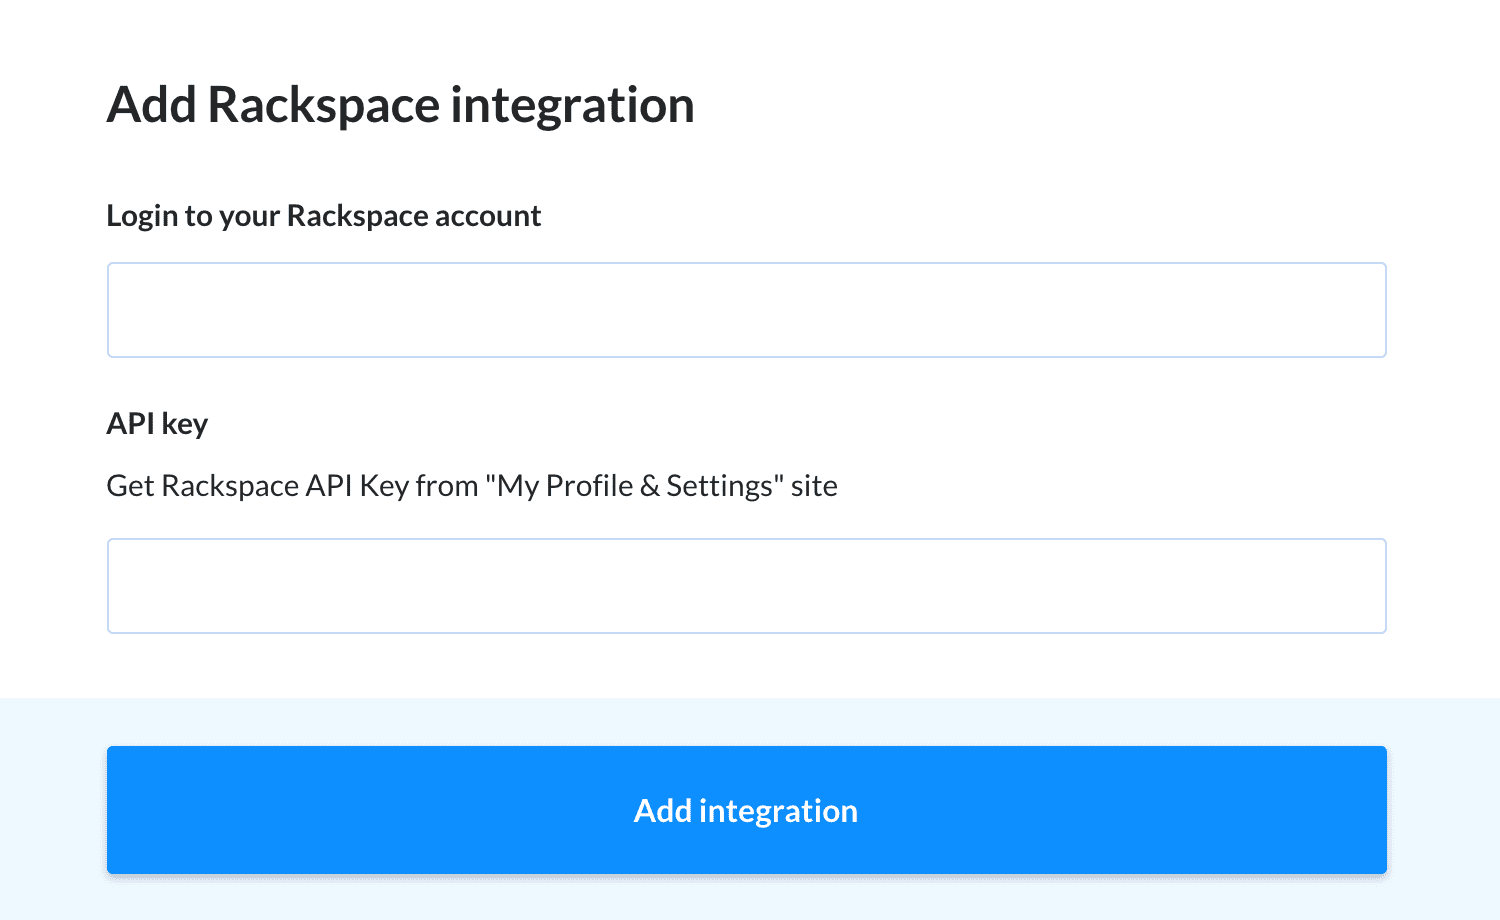 Adding Rackspace integration